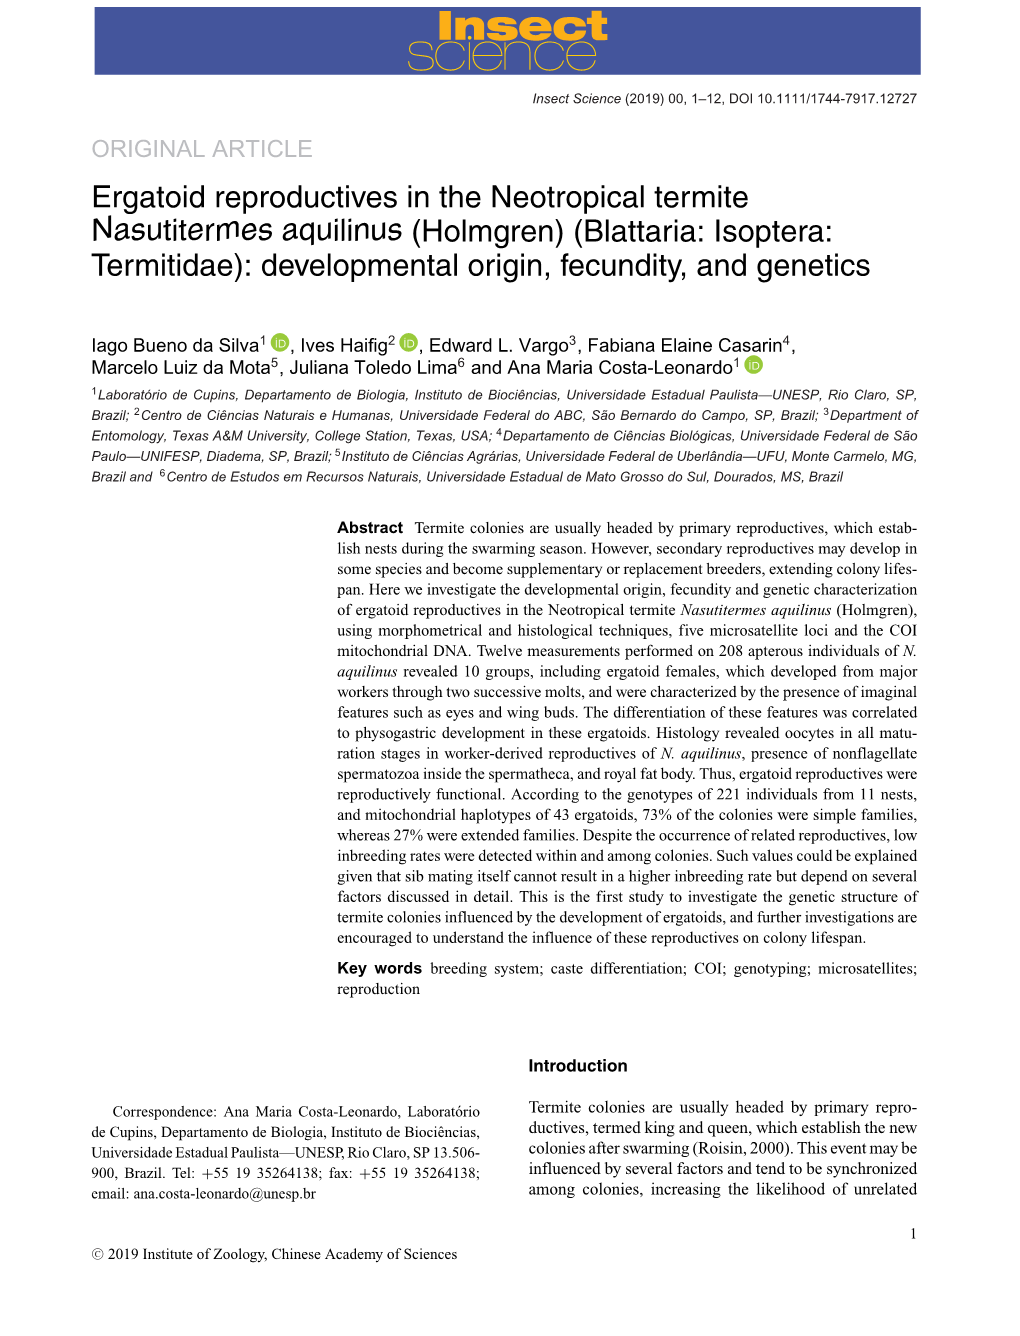 Ergatoid Reproductives in the Neotropical Termite Nasutitermes Aquilinus (Holmgren) (Blattaria: Isoptera: Termitidae): Developmental Origin, Fecundity, and Genetics